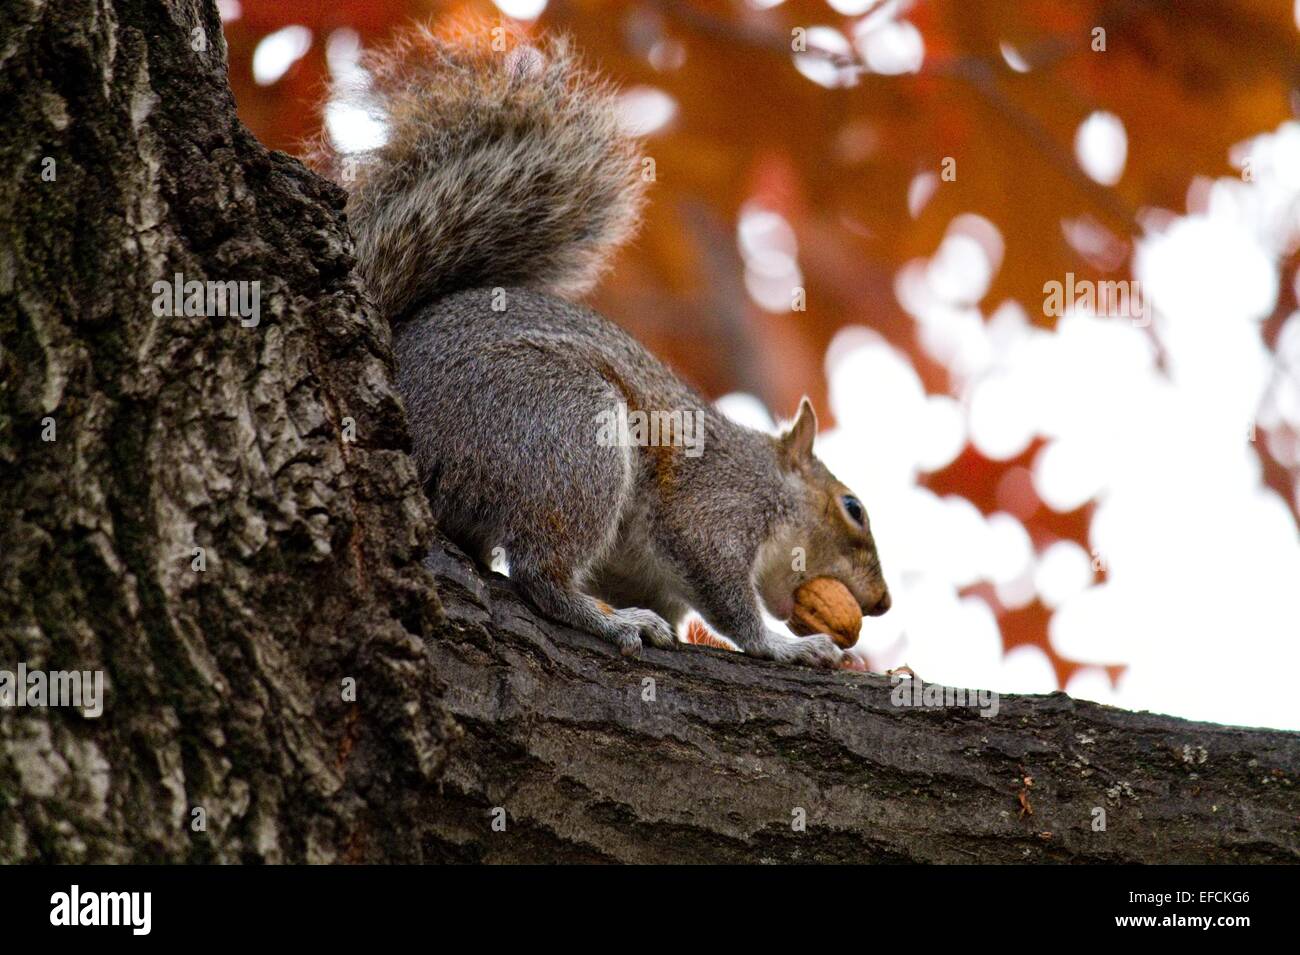 Squirrel eating on the branch (Scoiattolo che mangia sul tronco) Stock Photo